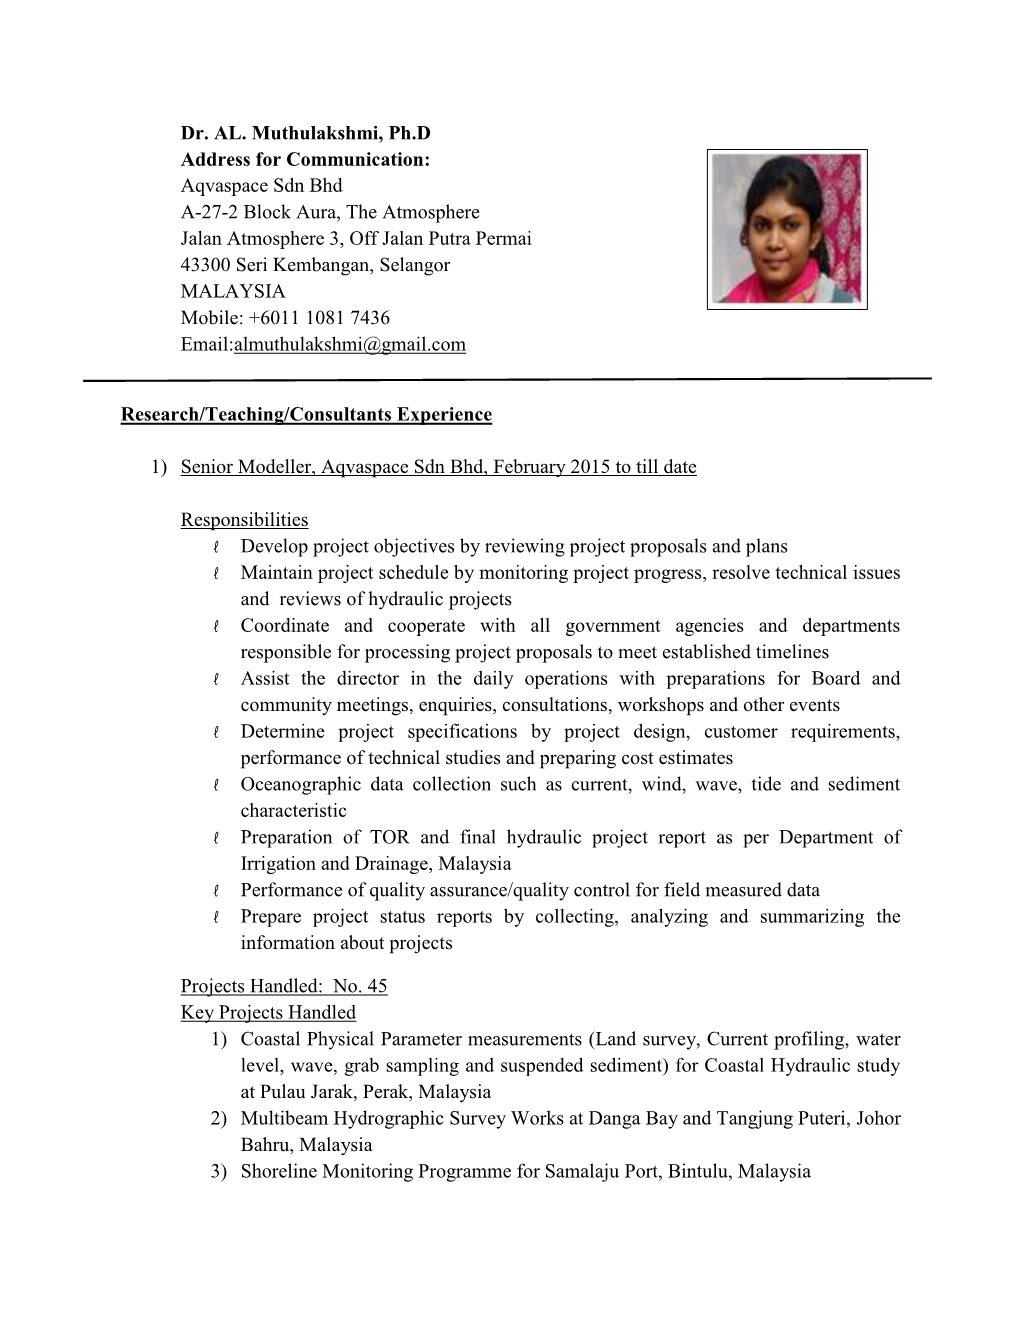 Dr. AL. Muthulakshmi, Ph.D Address for Communication: Aqvaspace Sdn Bhd A-27-2 Block Aura, the Atmosphere Jalan Atmosphere 3